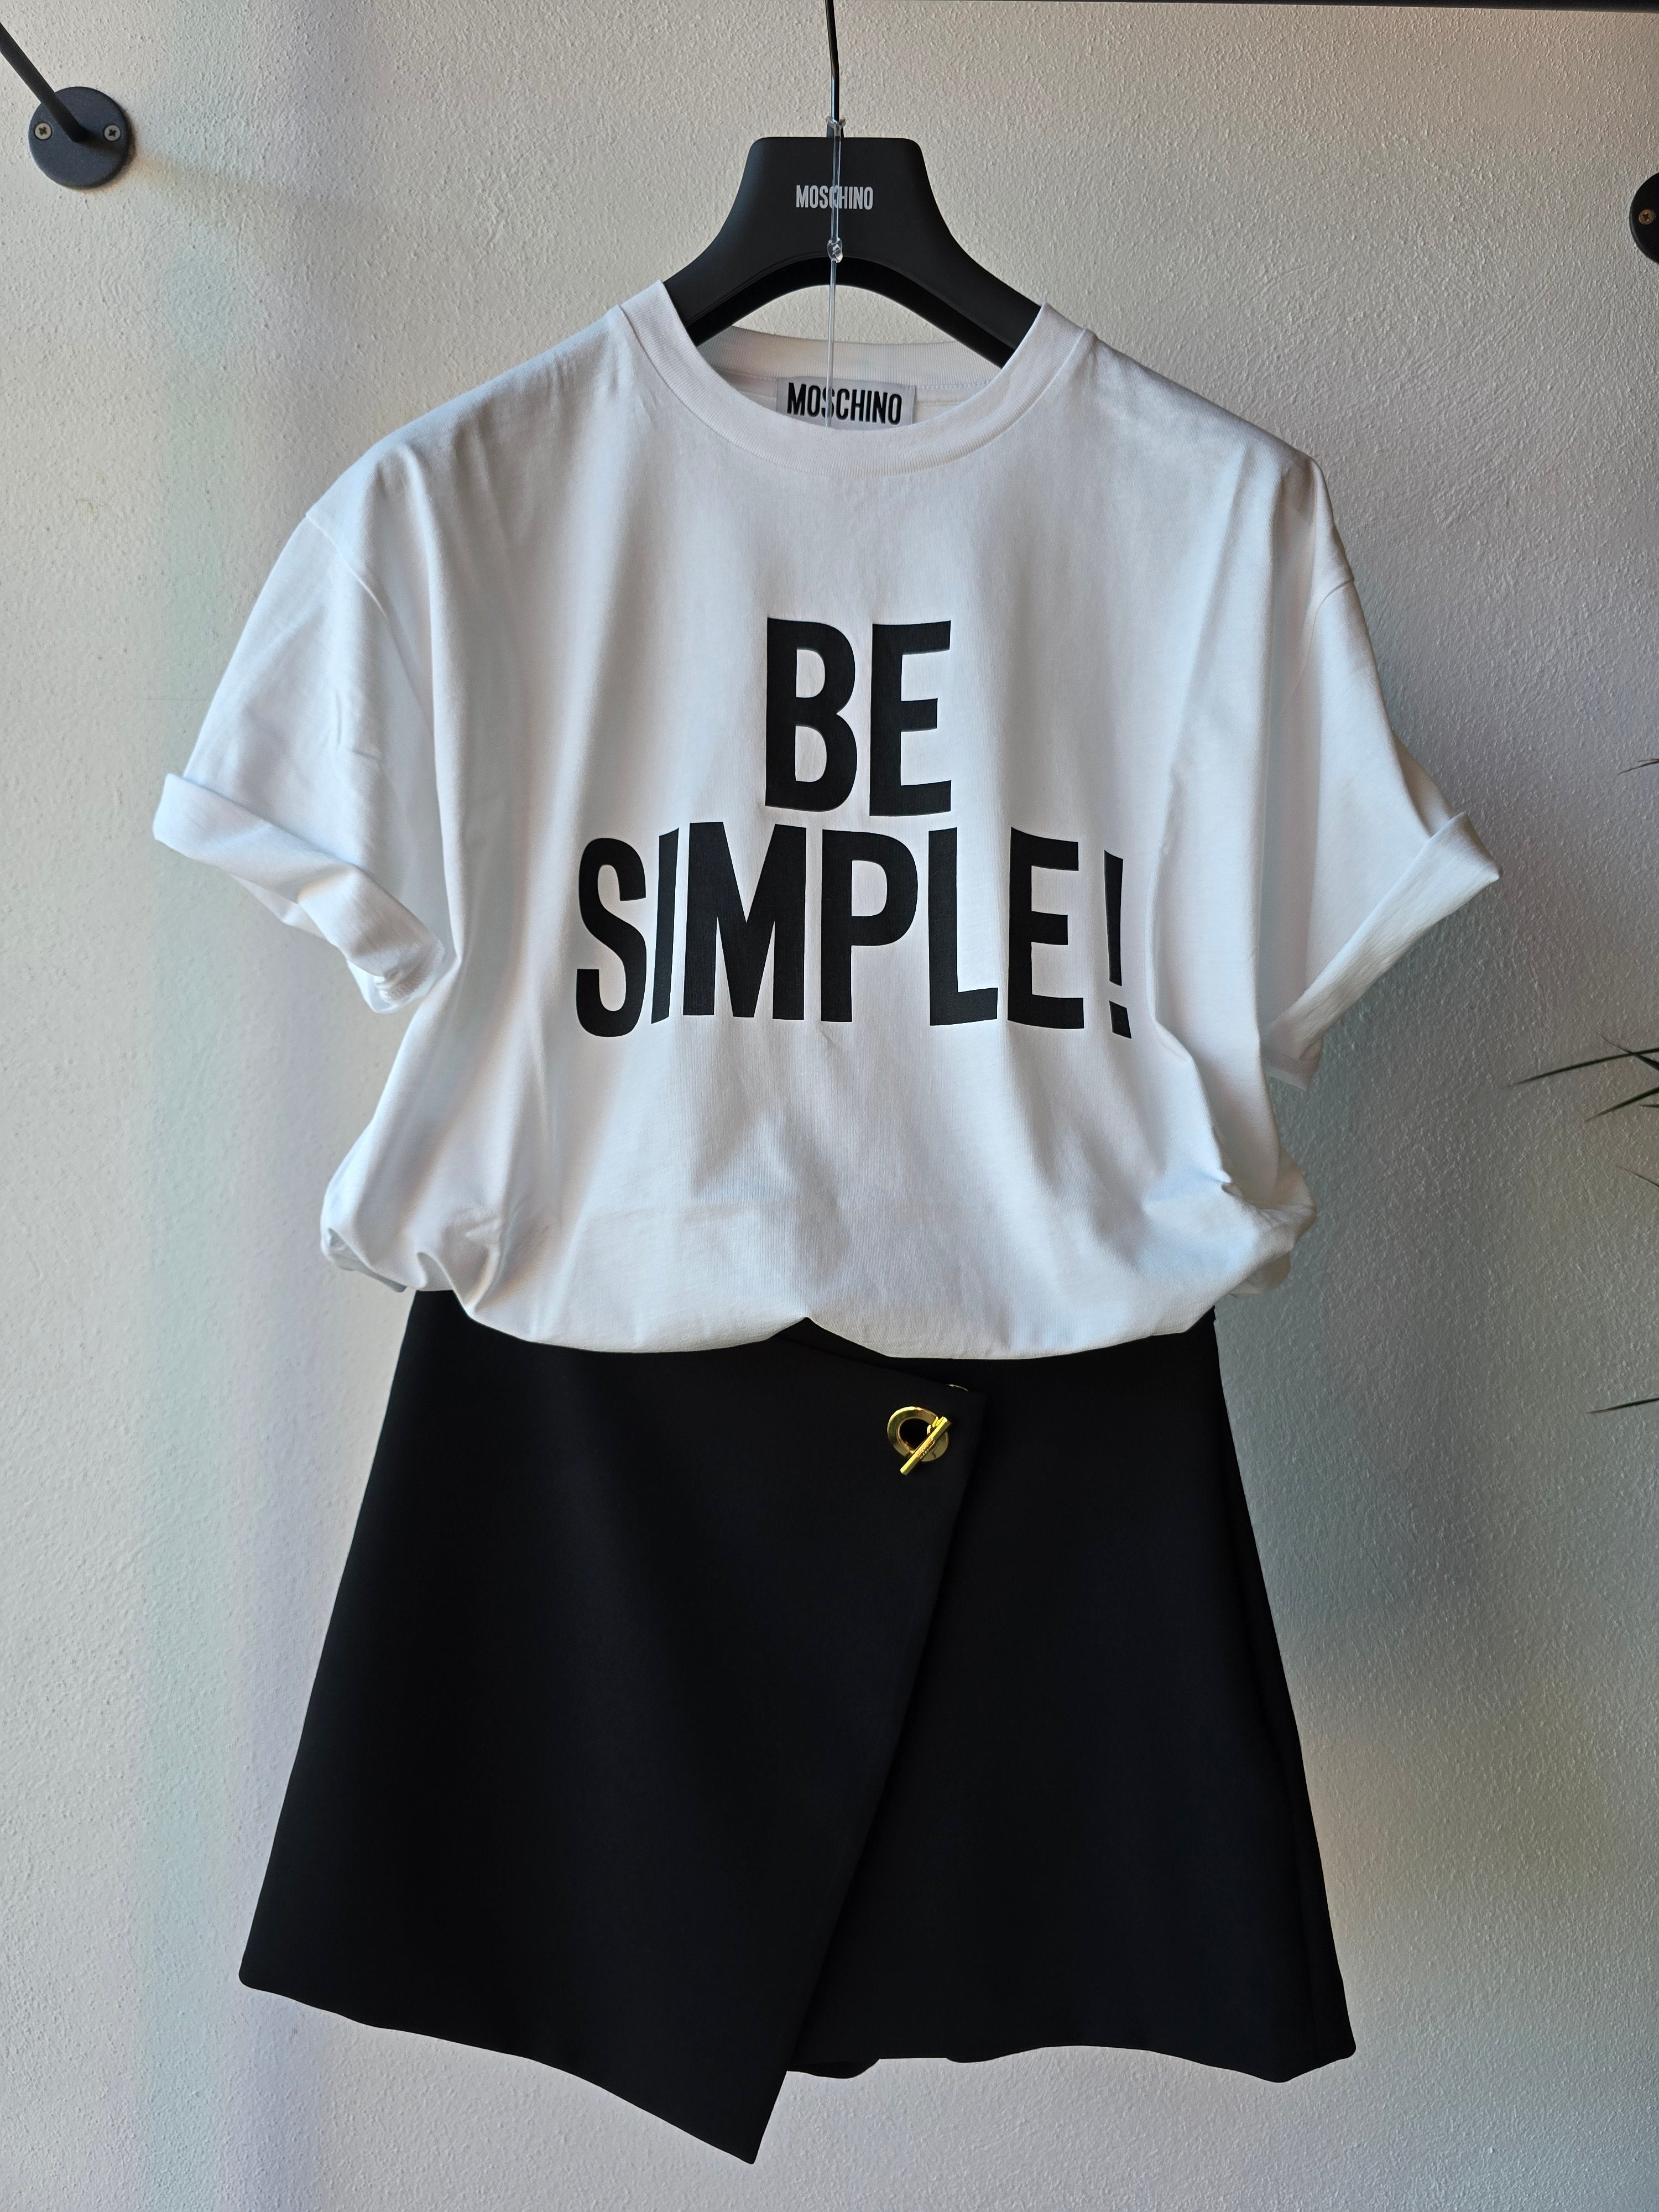 Moschino - T-shirt bianca "Be Simple" bianca